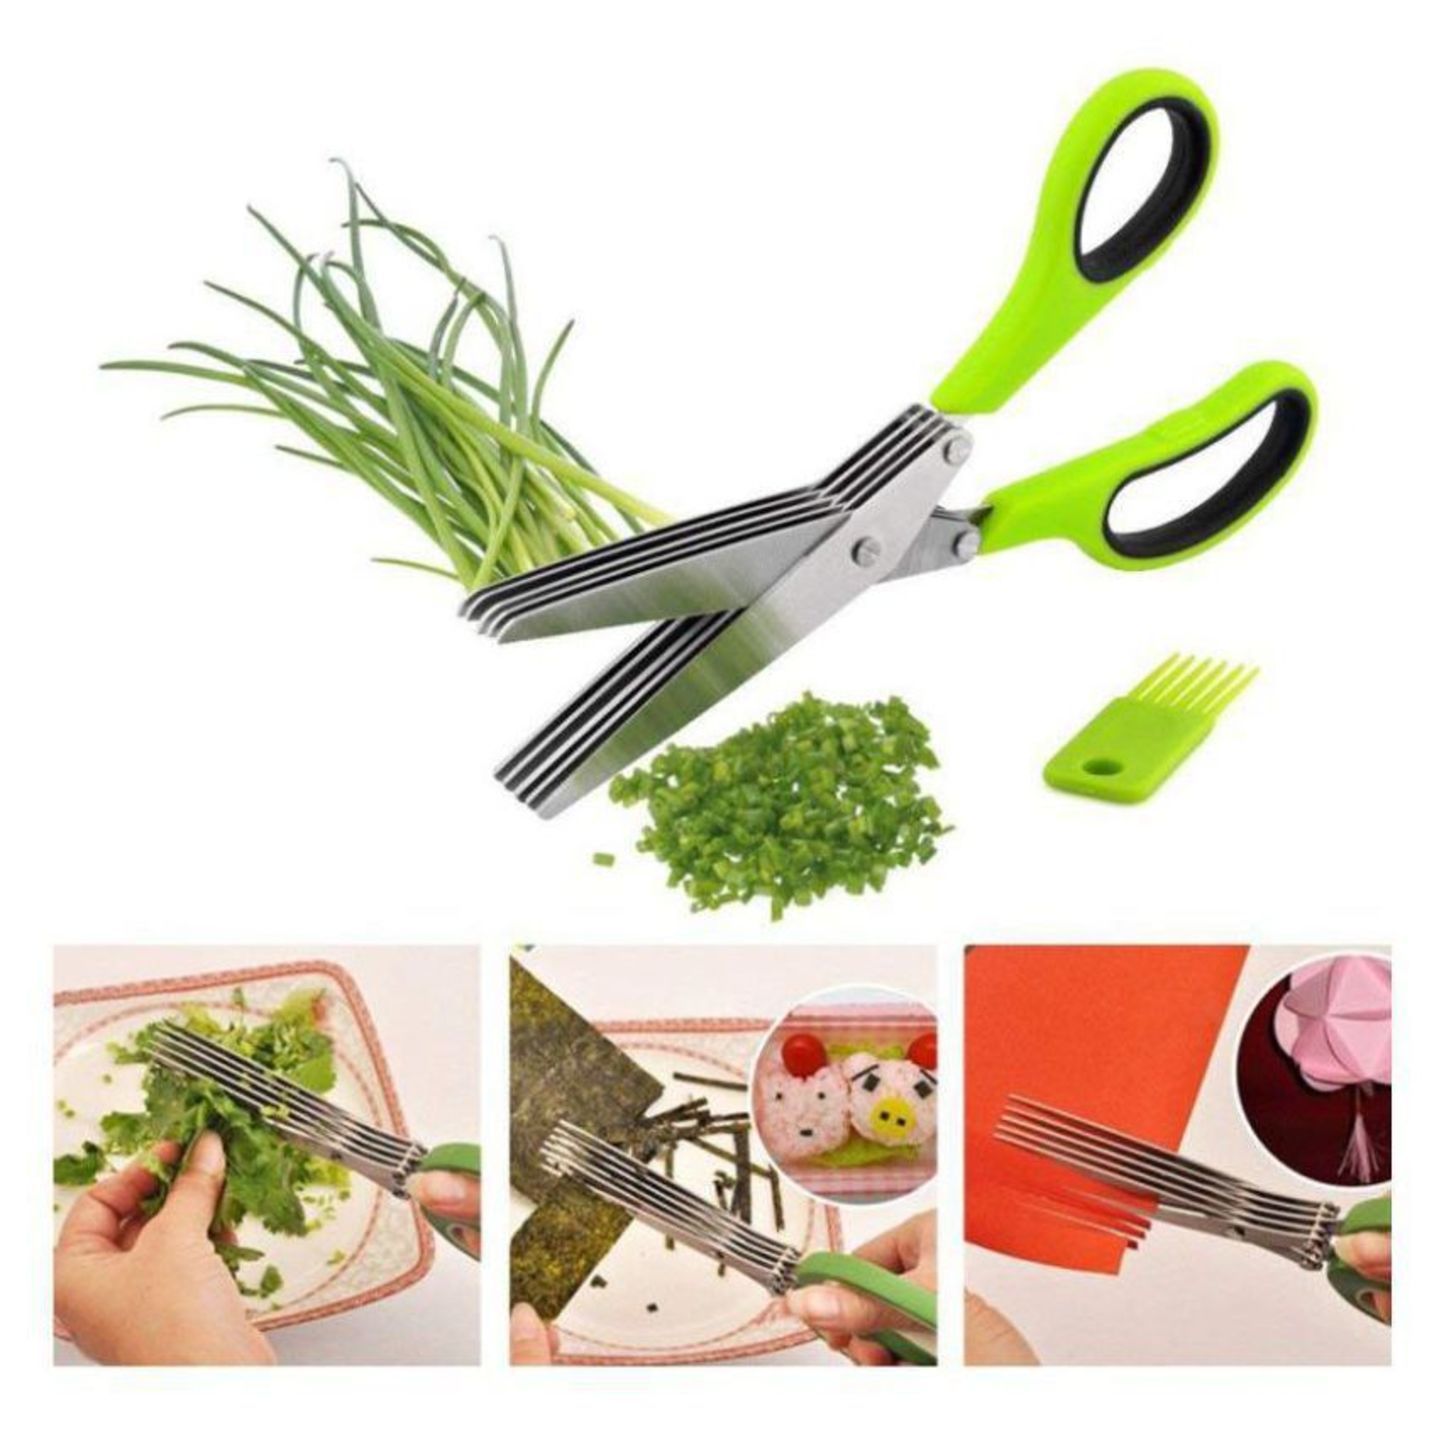 JonPrix 1 PC, Vegetable Cutting Scissors